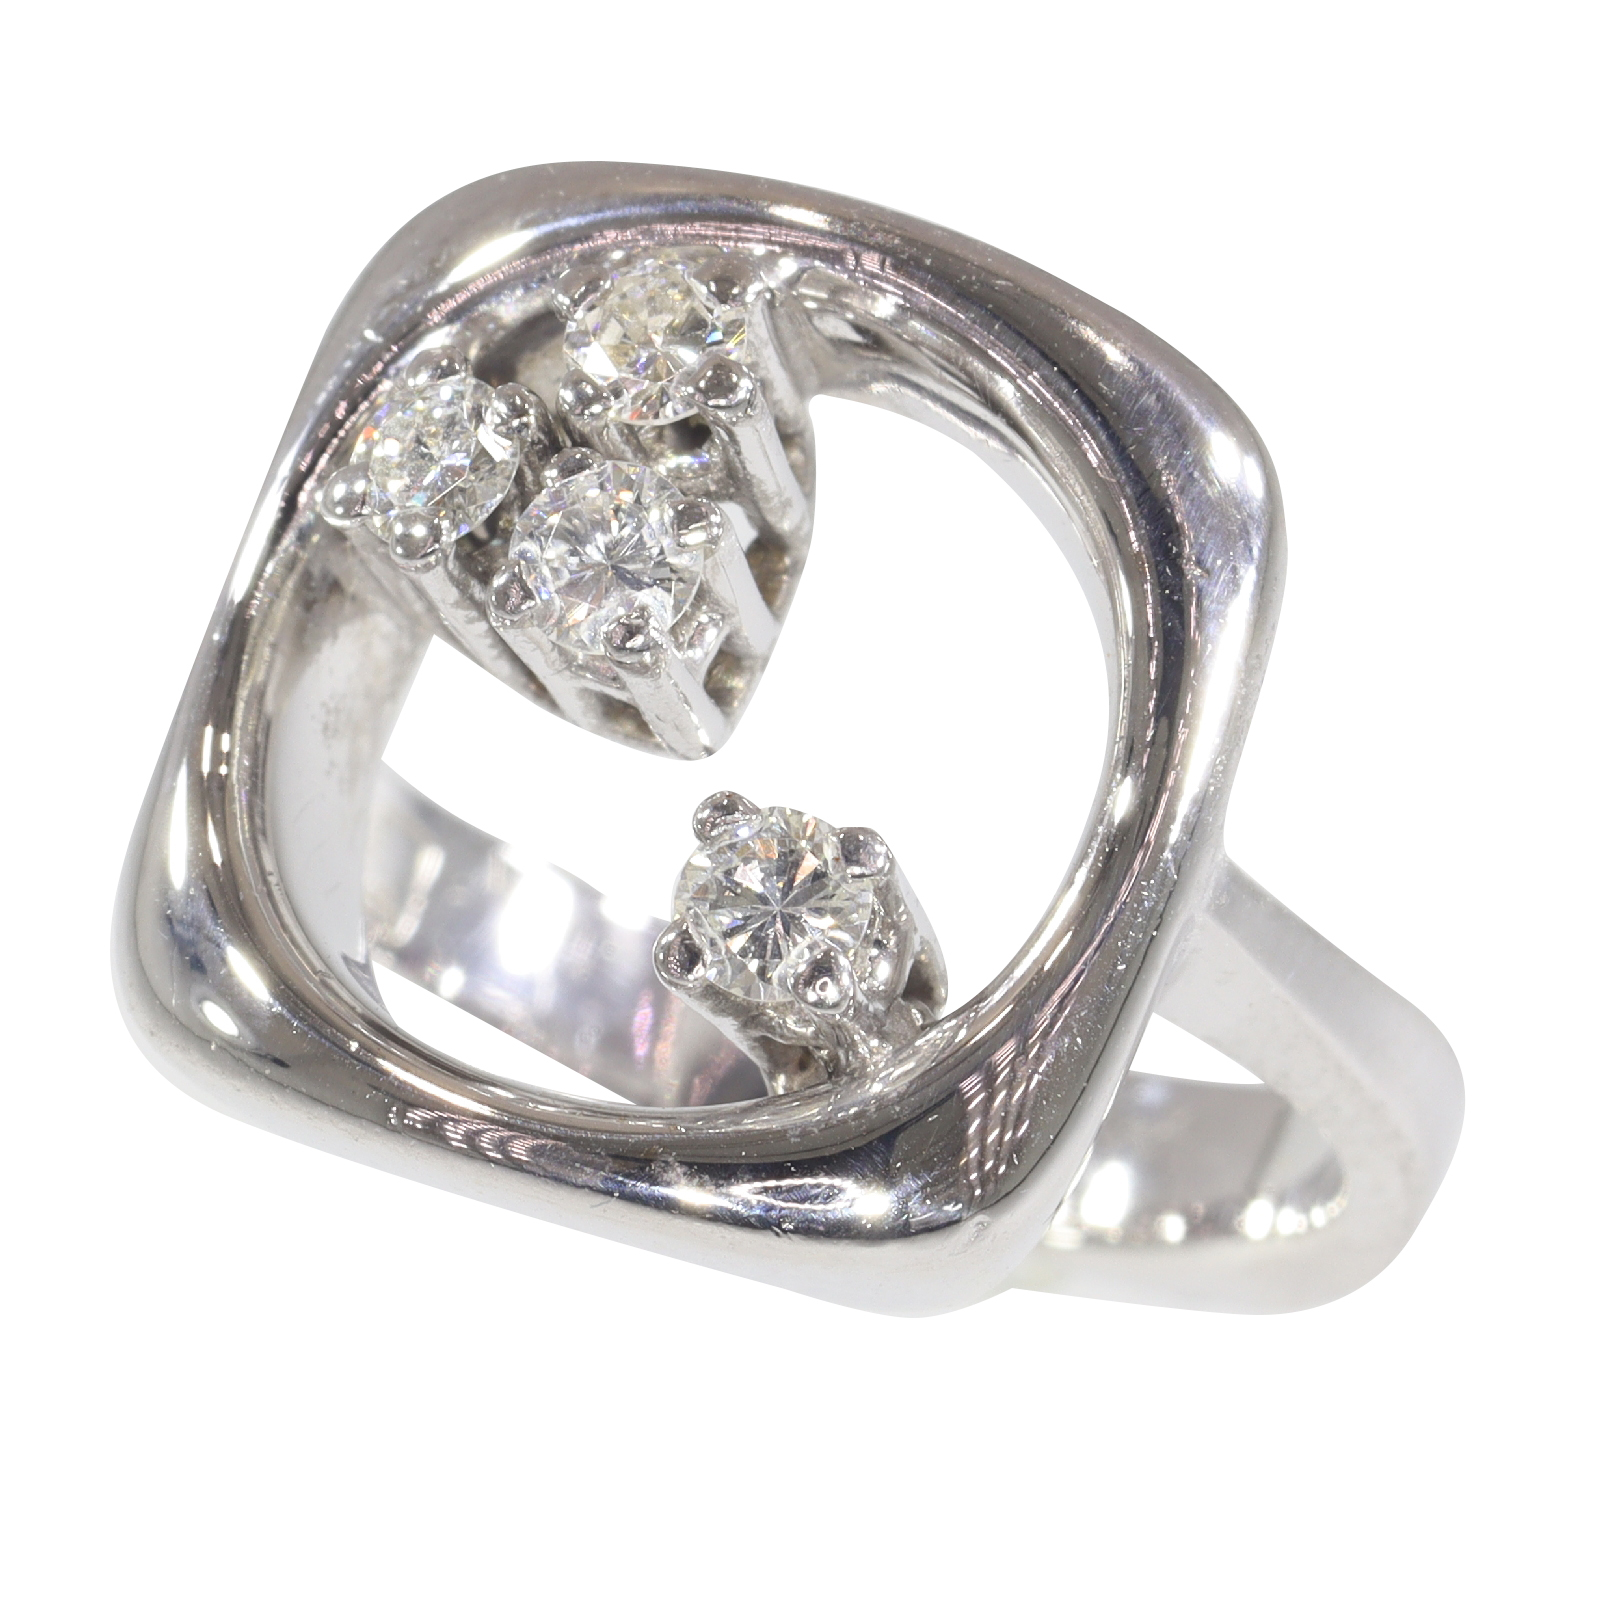 Vintage 1960's diamond ring